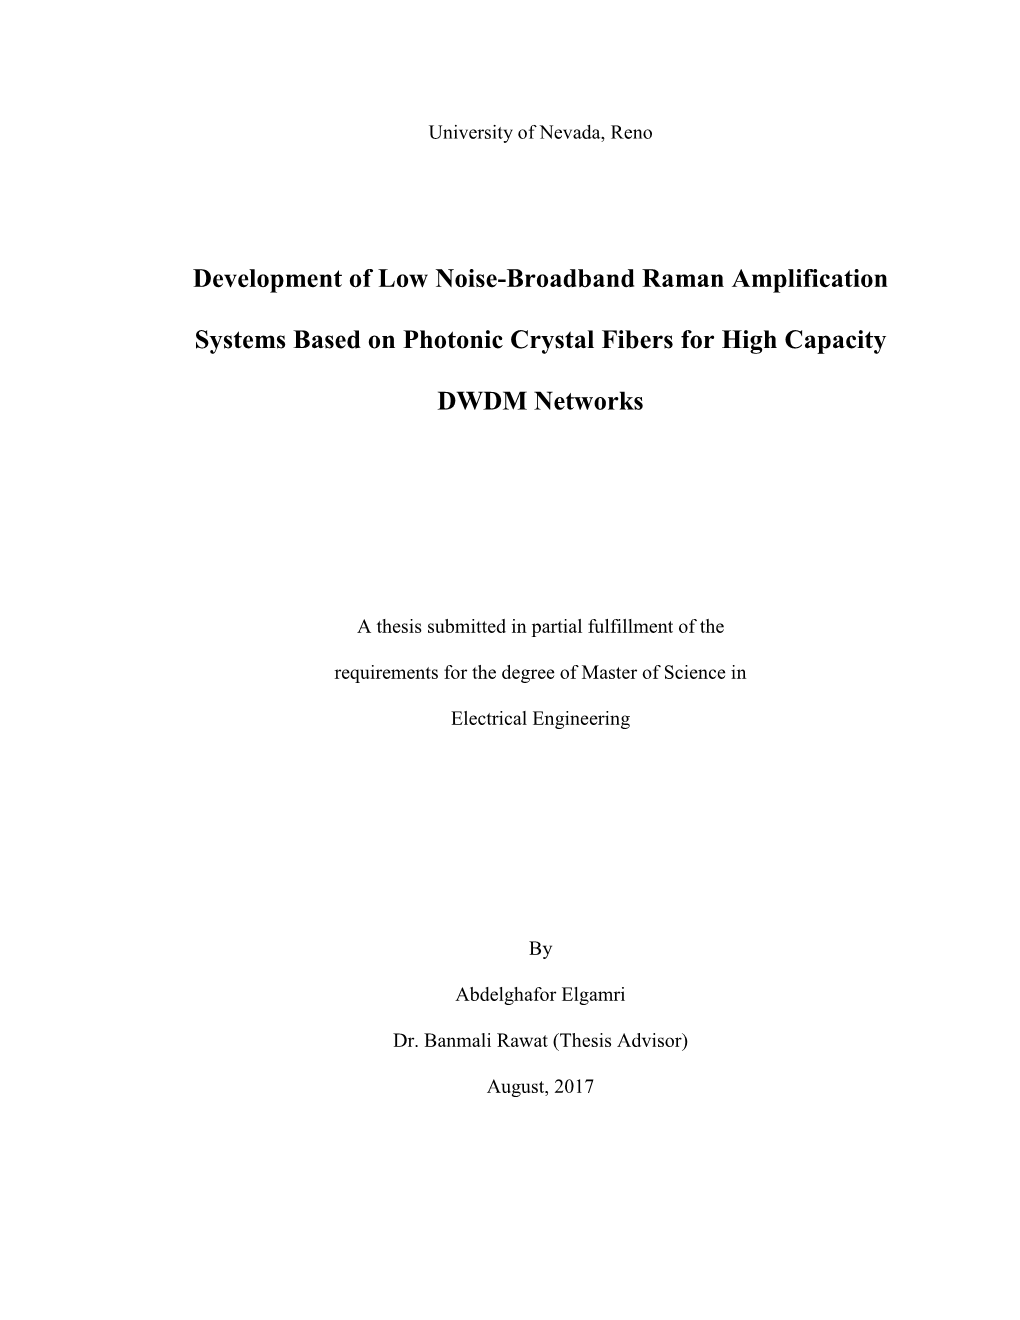 Development of Low Noise-Broadband Raman Amplification